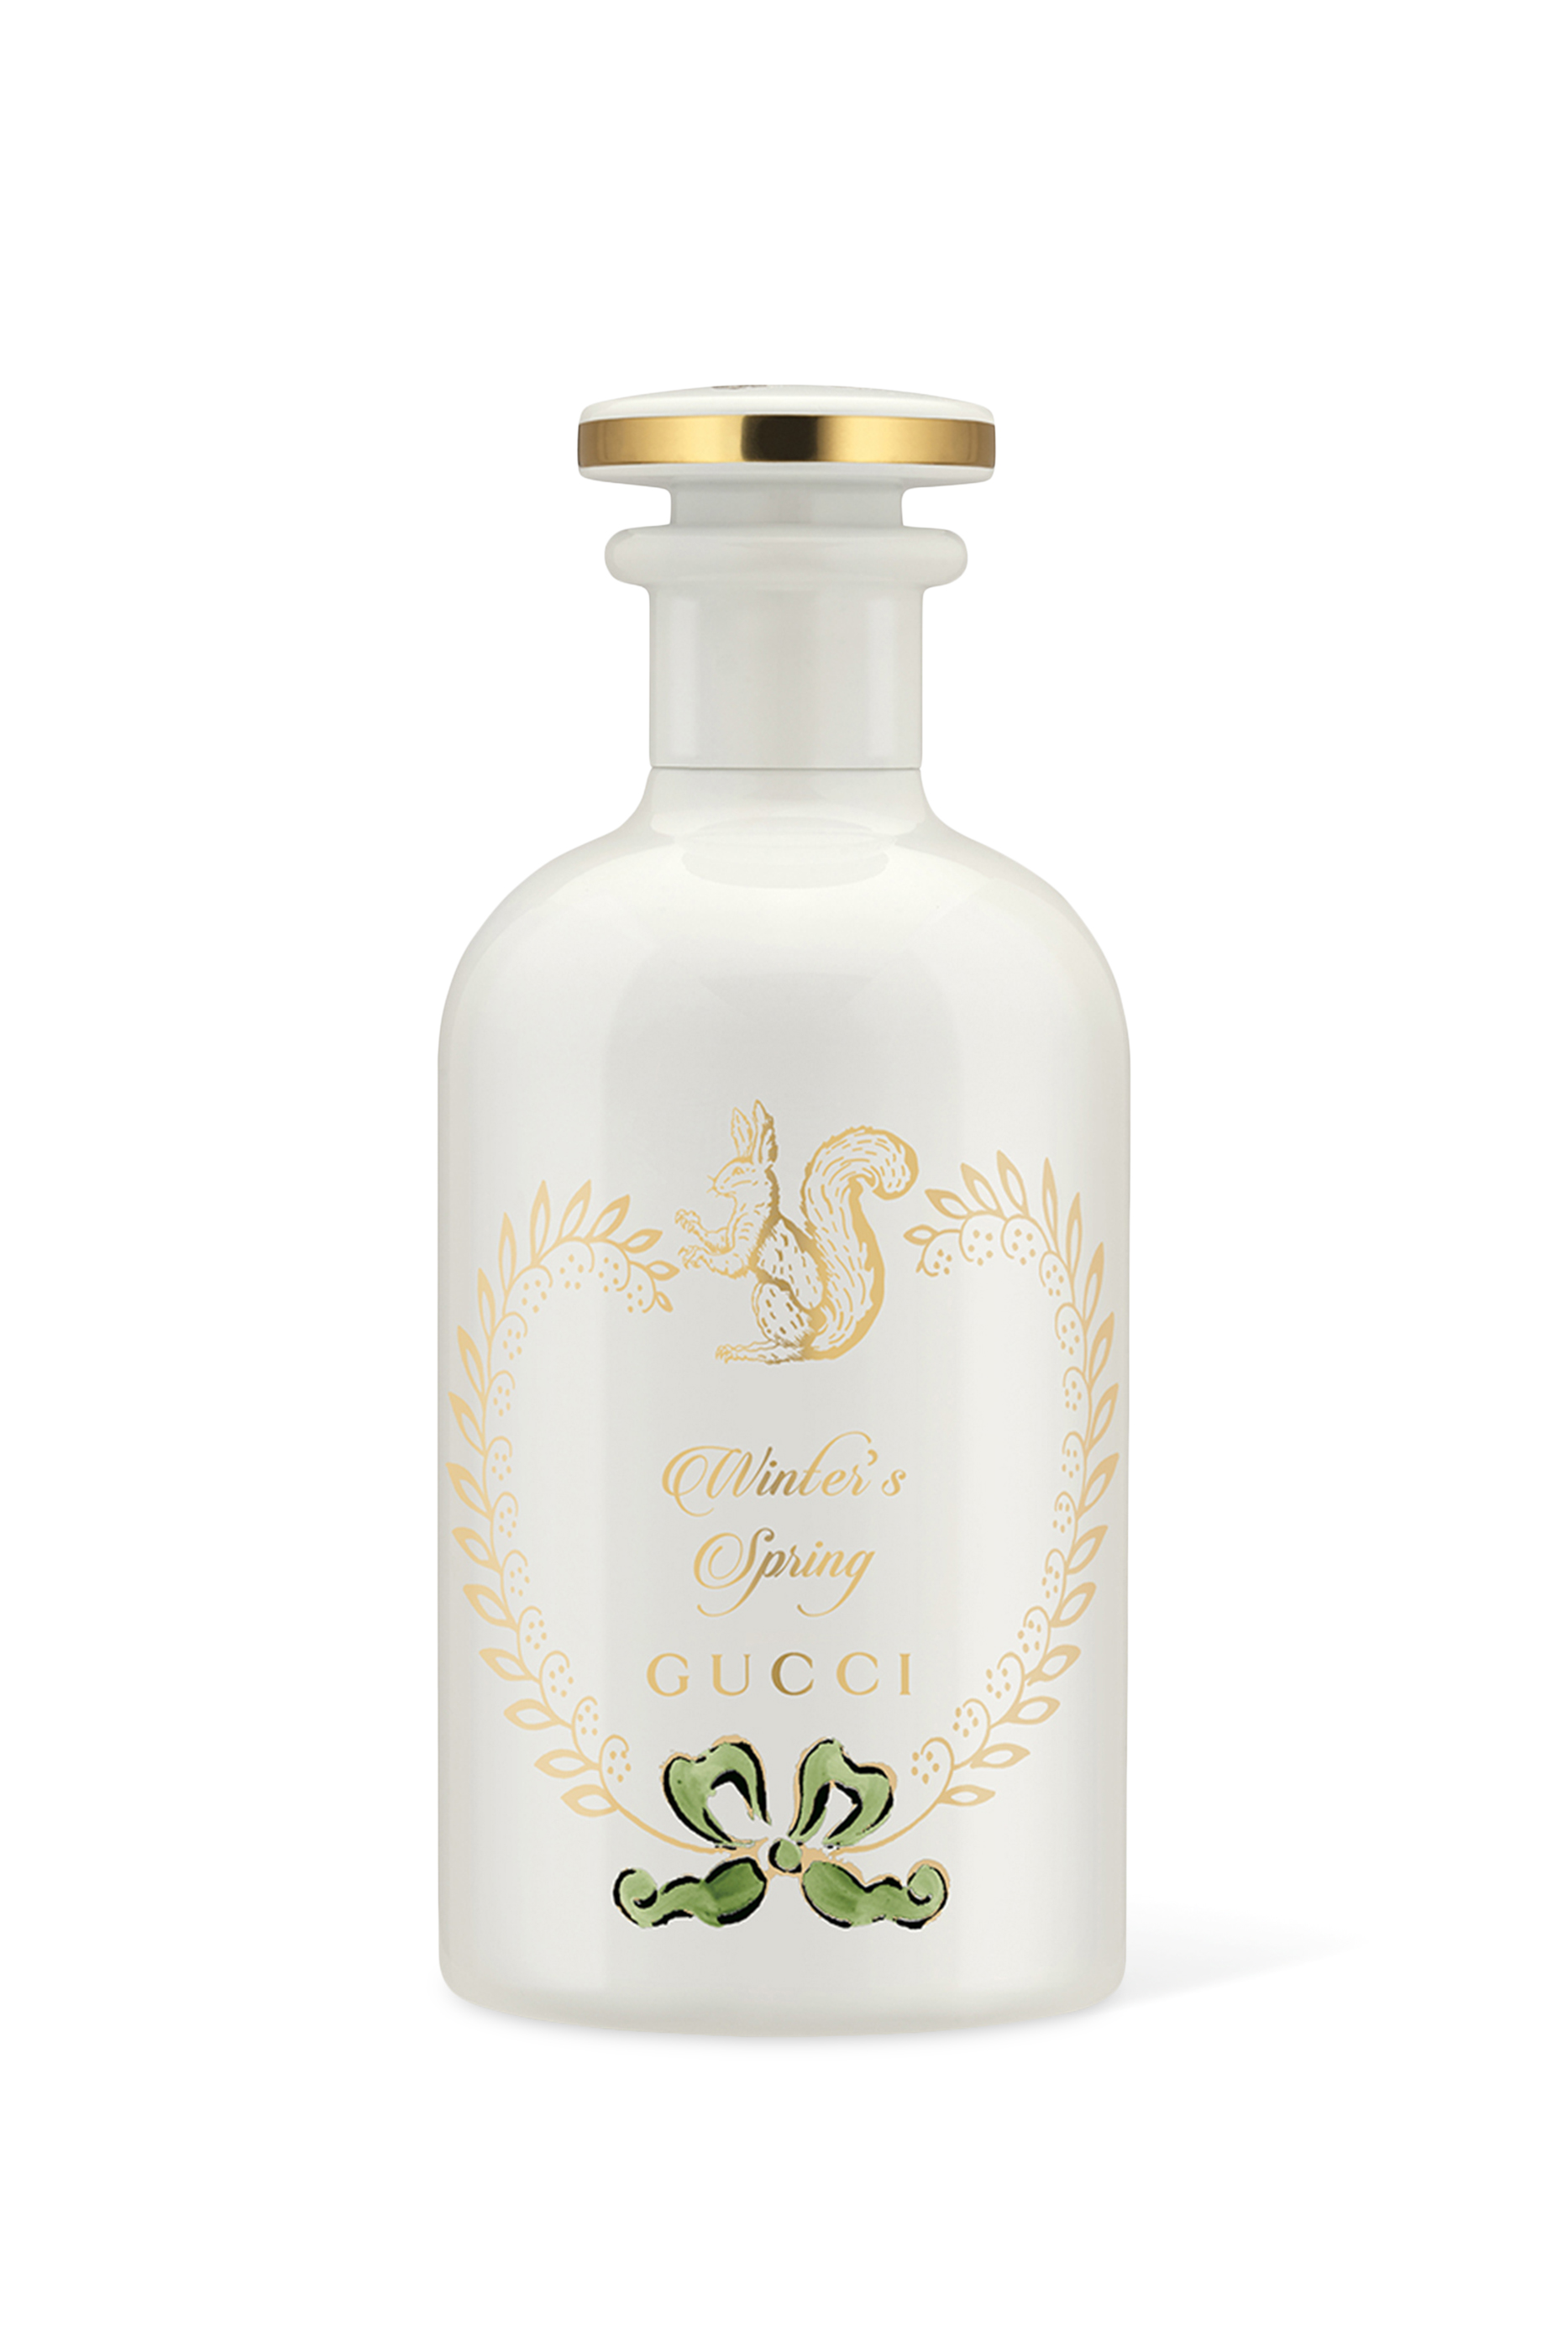 Buy Gucci Winter S Spring Eau De Parfum Unisex For Aed 1280 00 Fragrance Bloomingdale S Uae